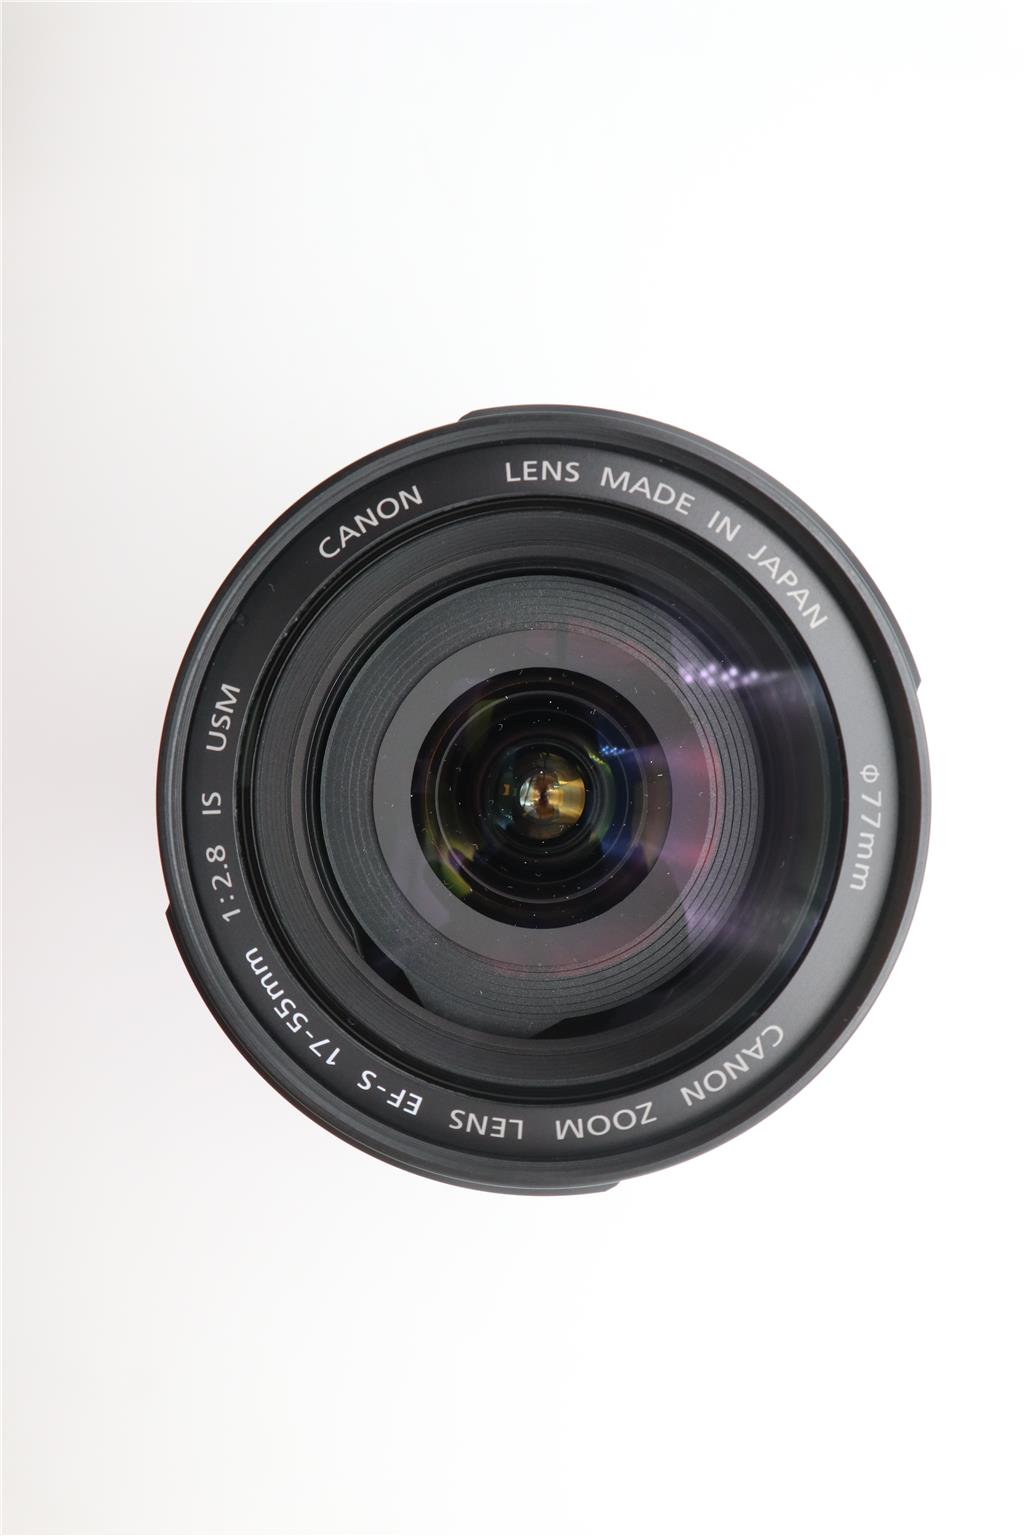 Canon 17-55mm Zoom Lens F2.8 EF-S IS USM, Stabilised, Ultra Sonic Motor